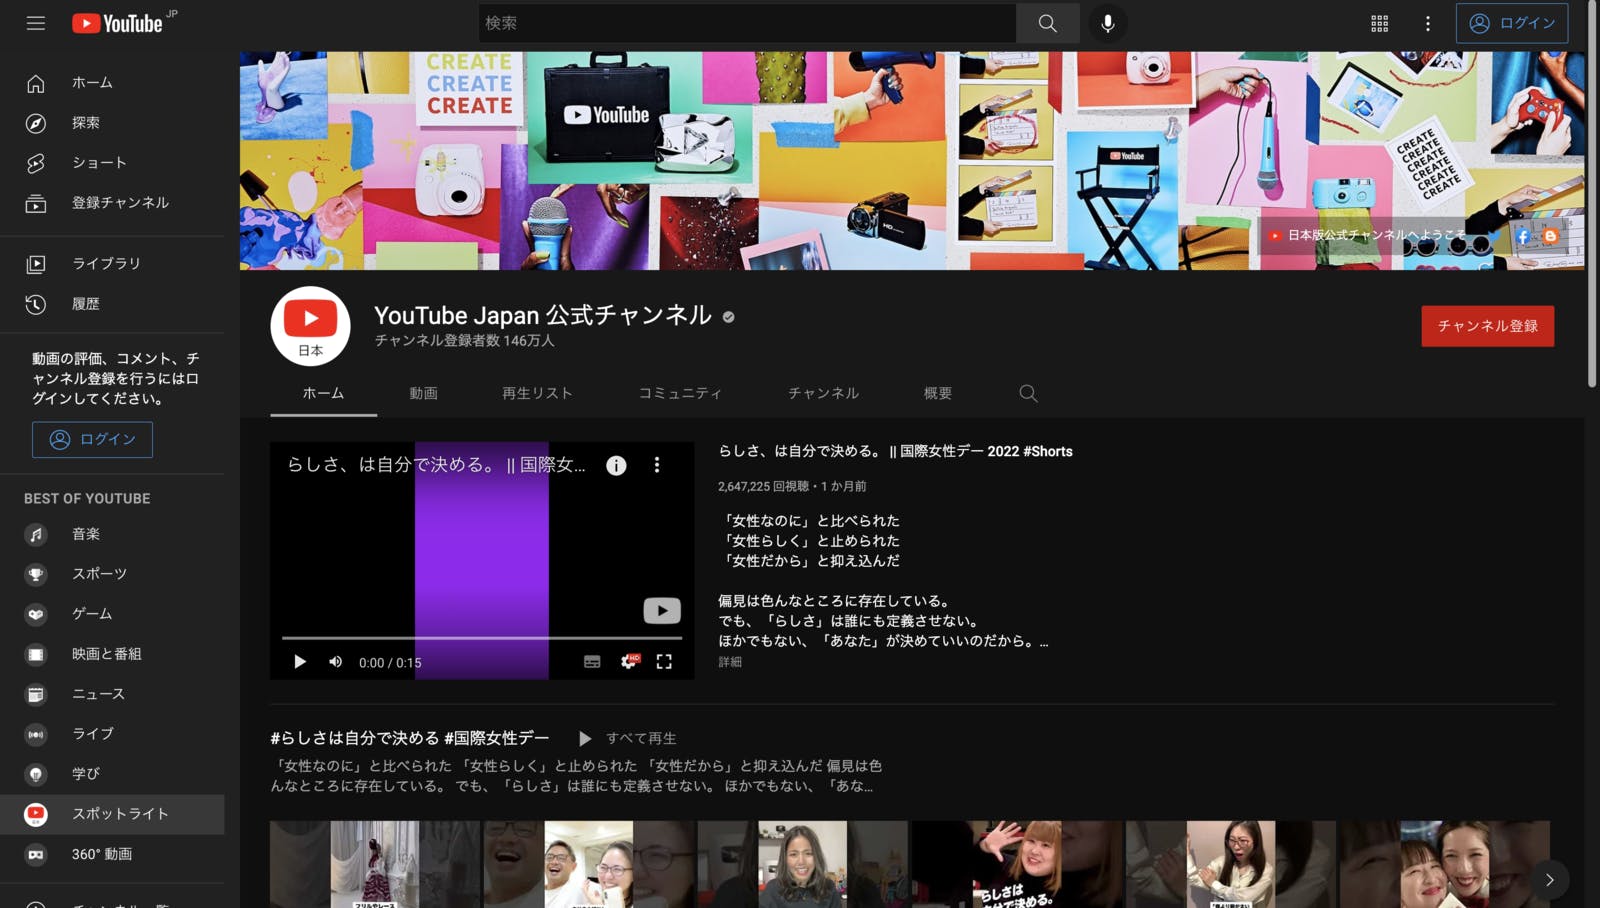 YouTube Japan 公式チャンネル